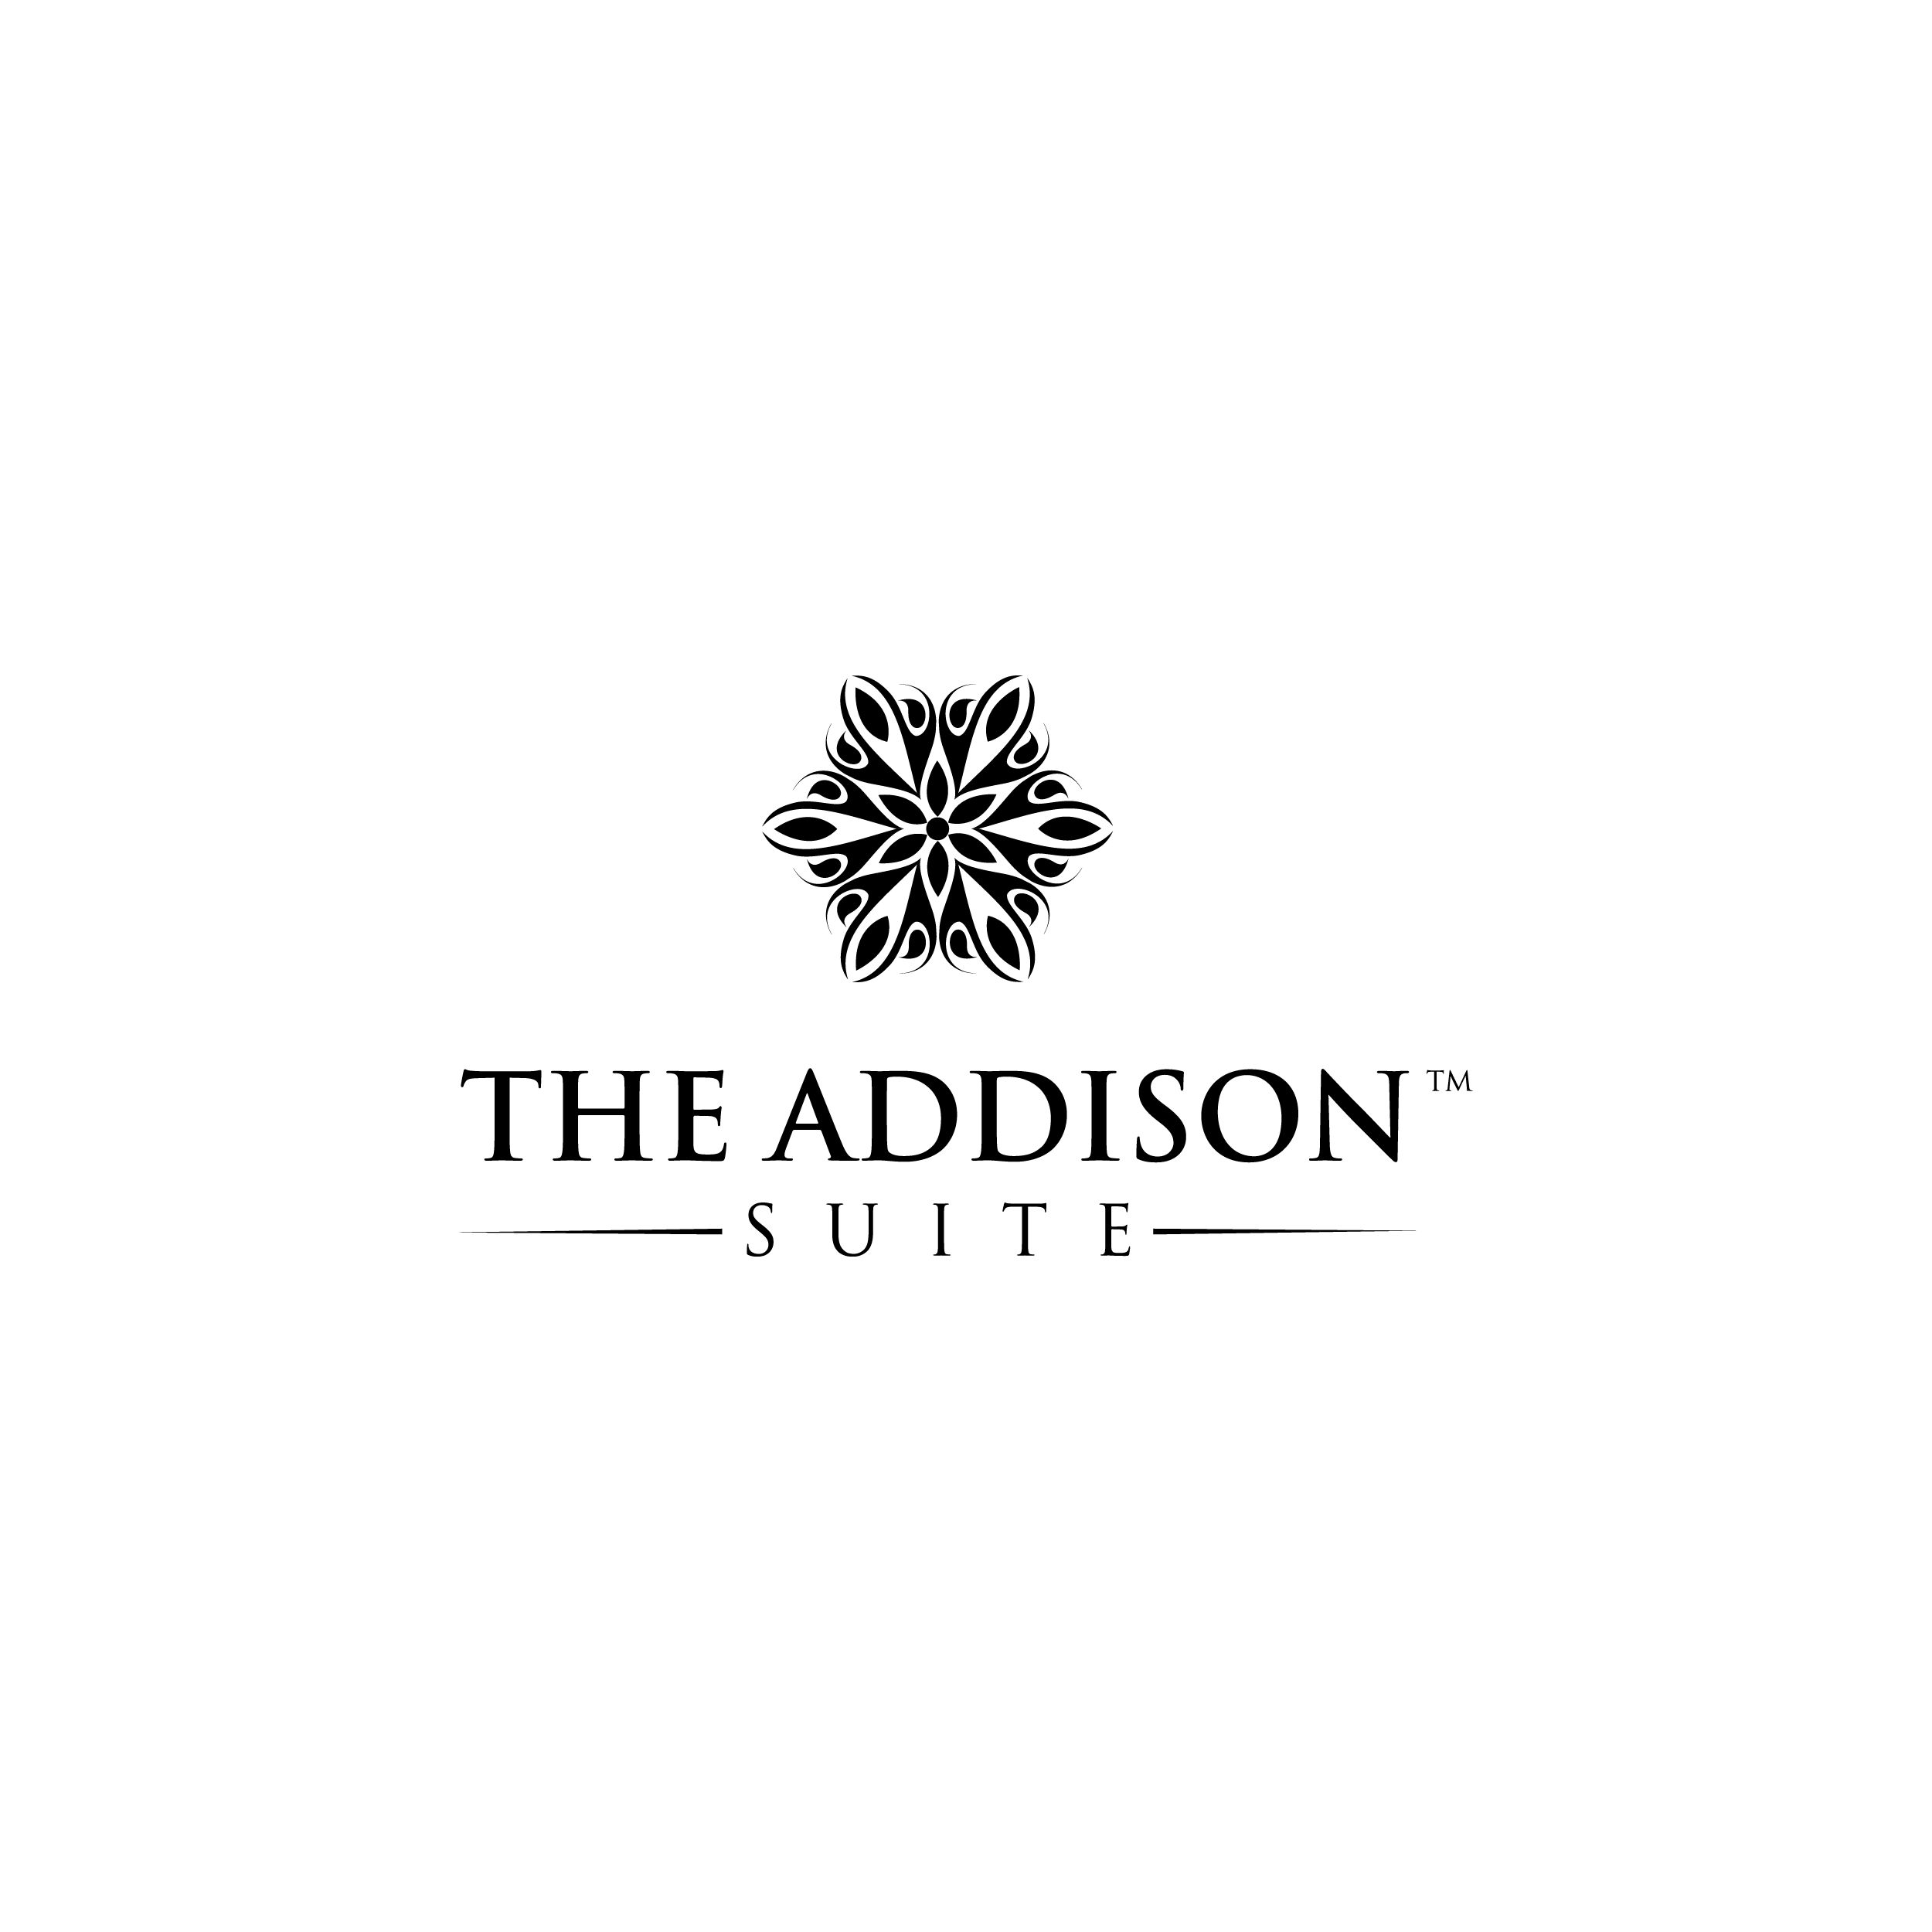 The Addison Suite